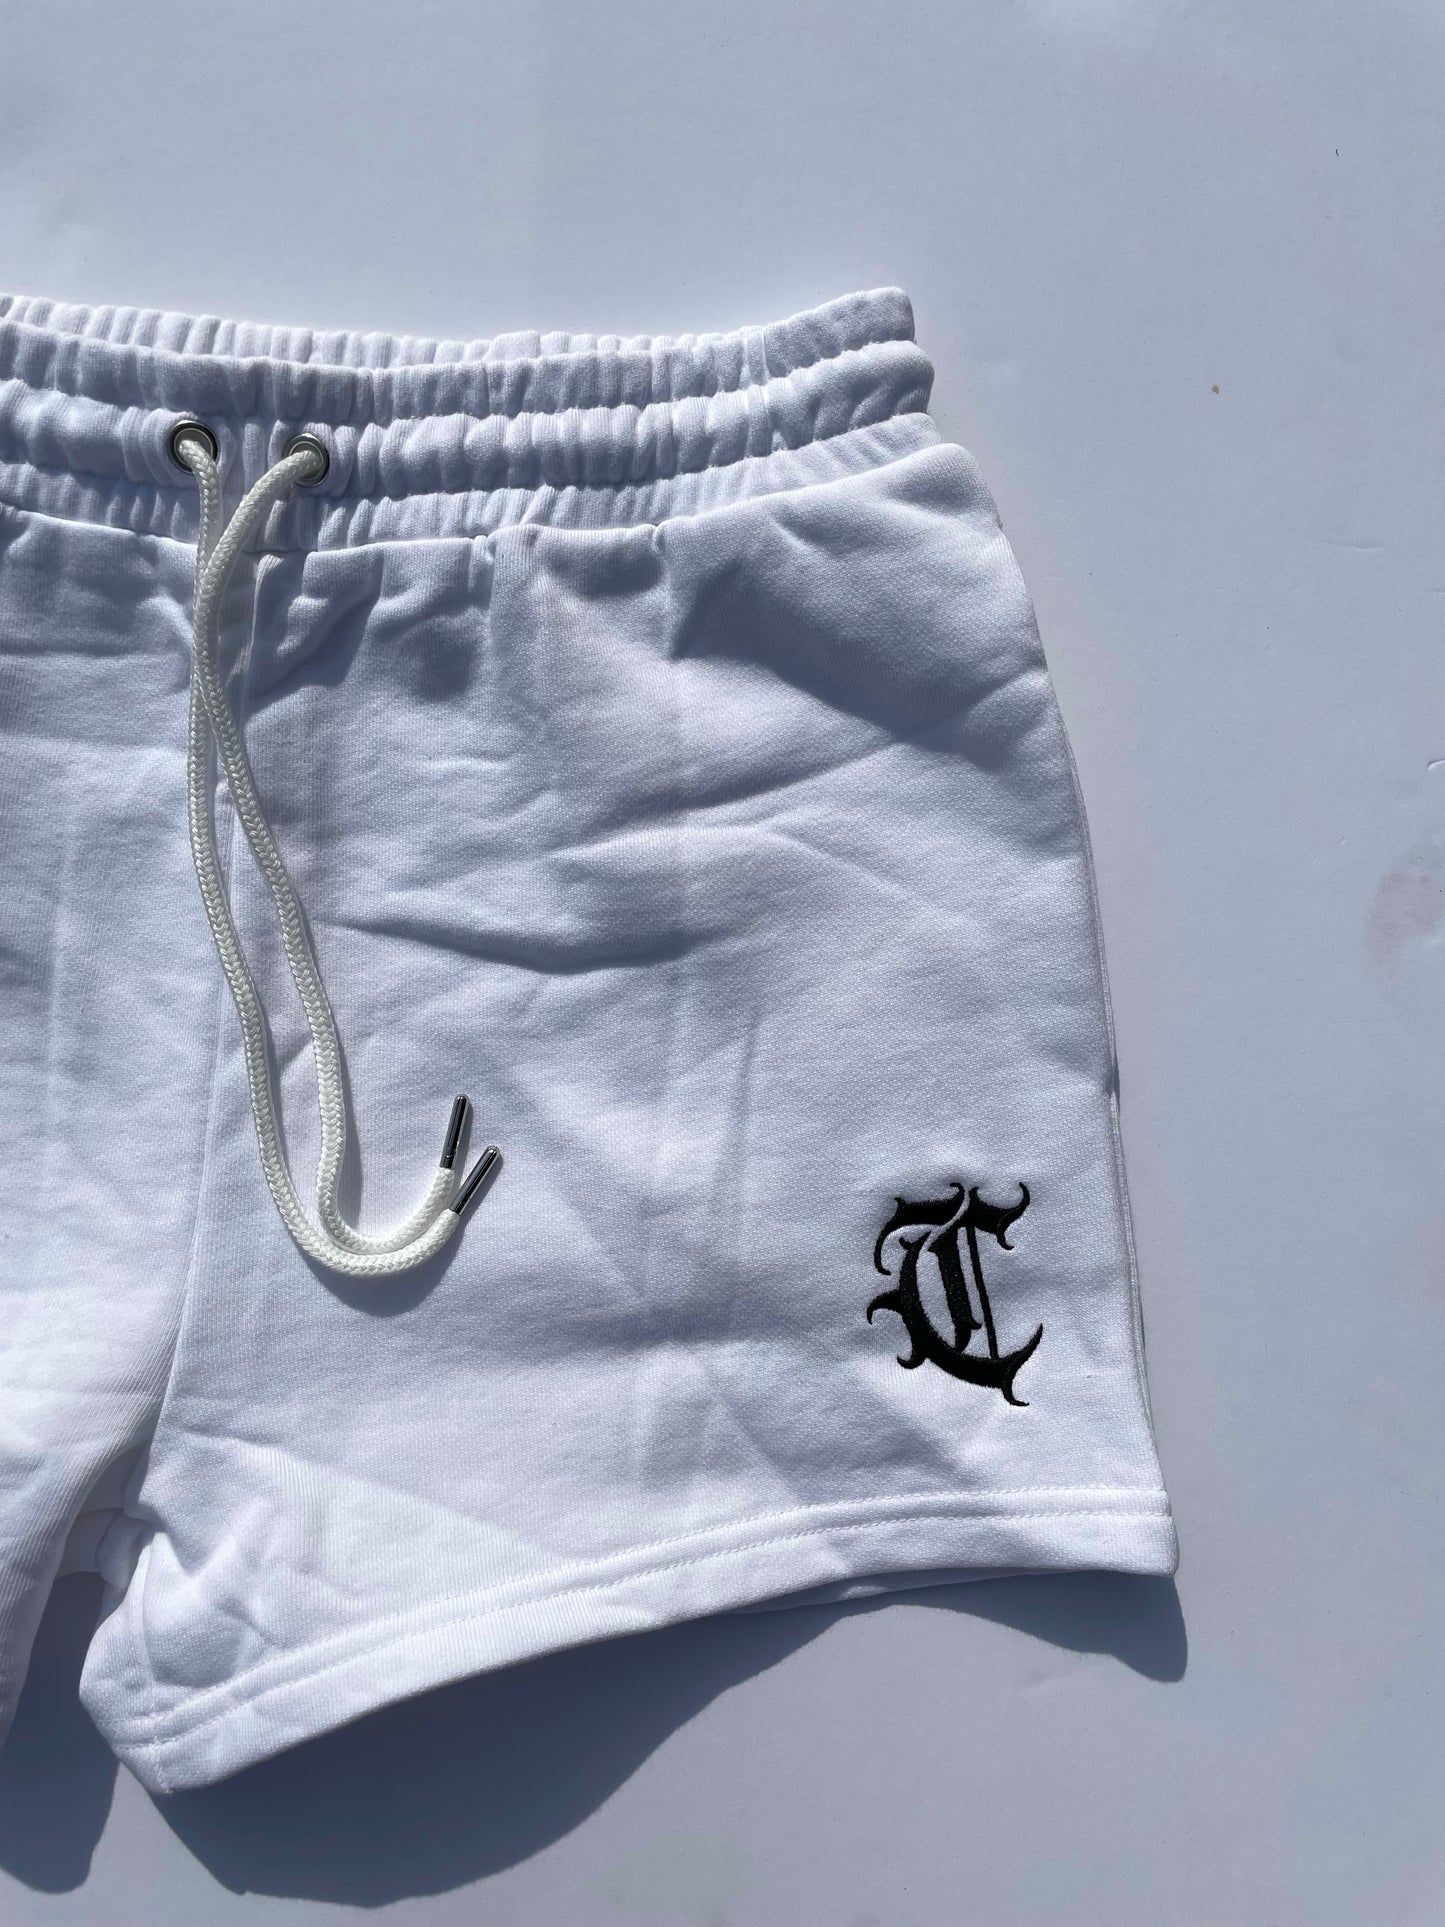 Chosen Shorts Set (White, Black)